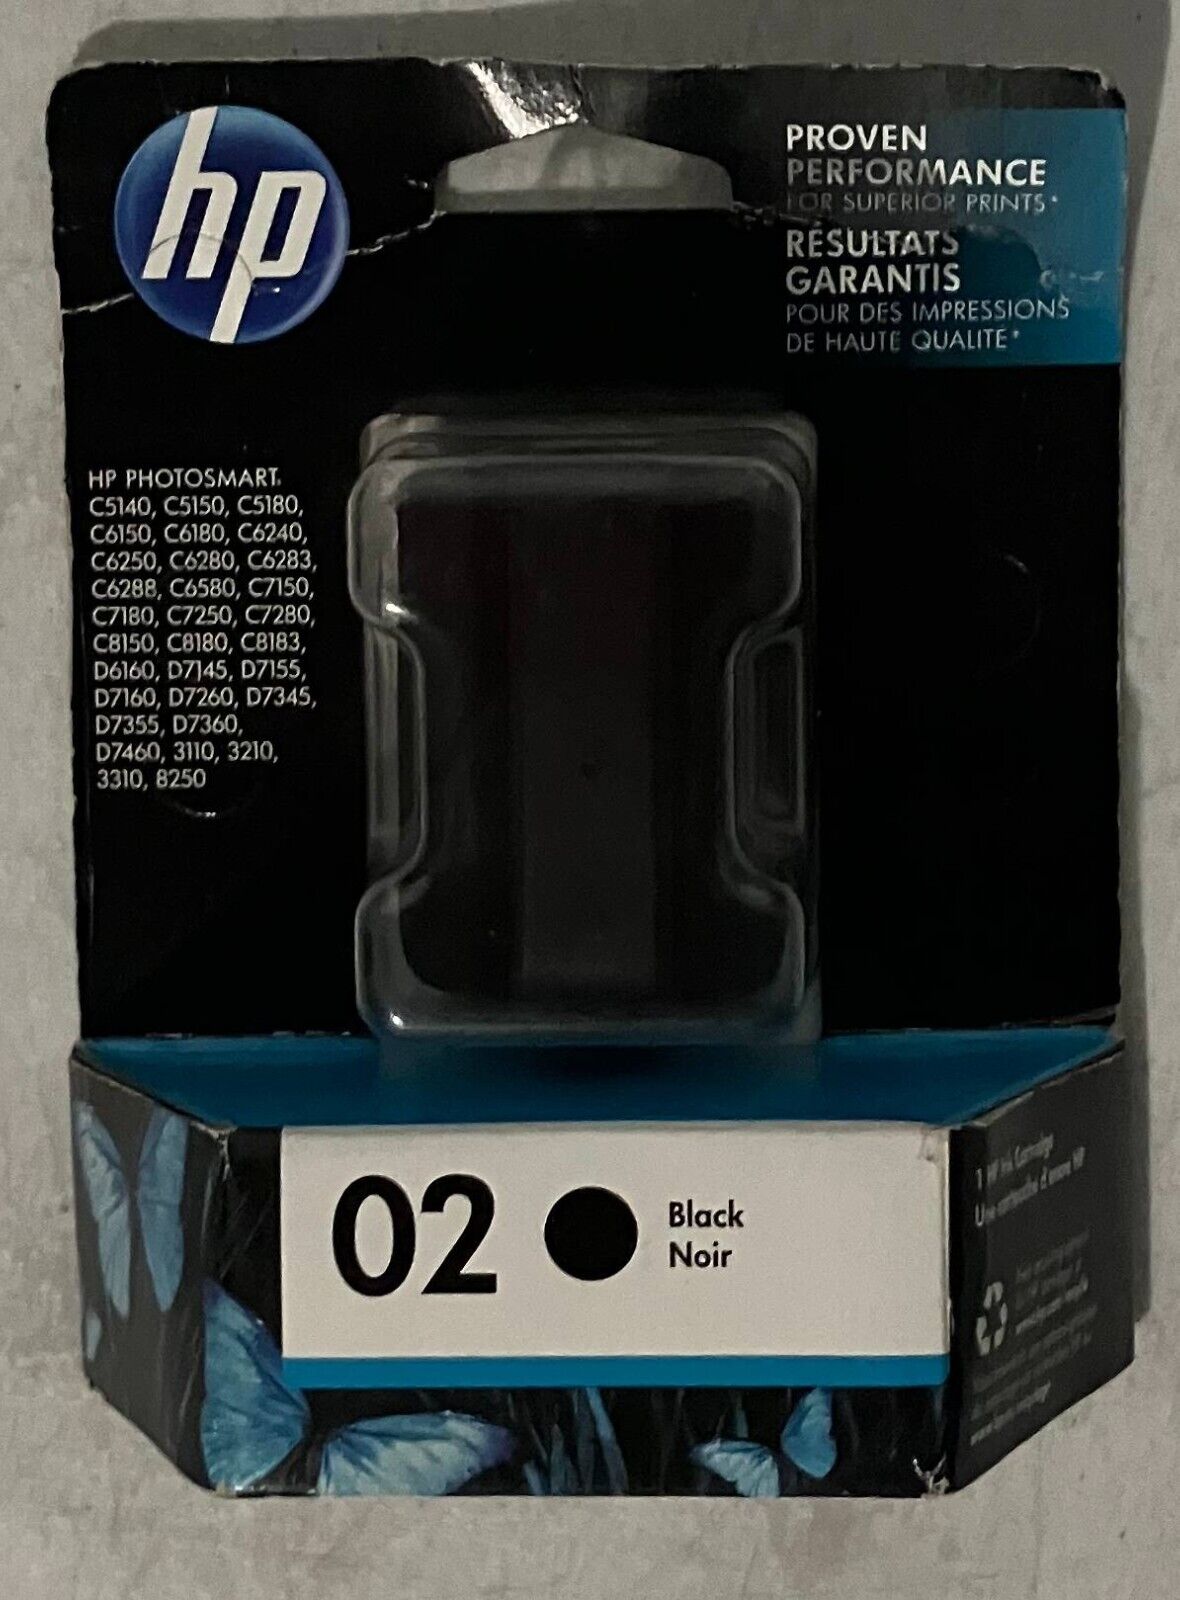 Genuine HP Invent Ink Cartridge 02 Black C8721W New for HP Photosmart Printer